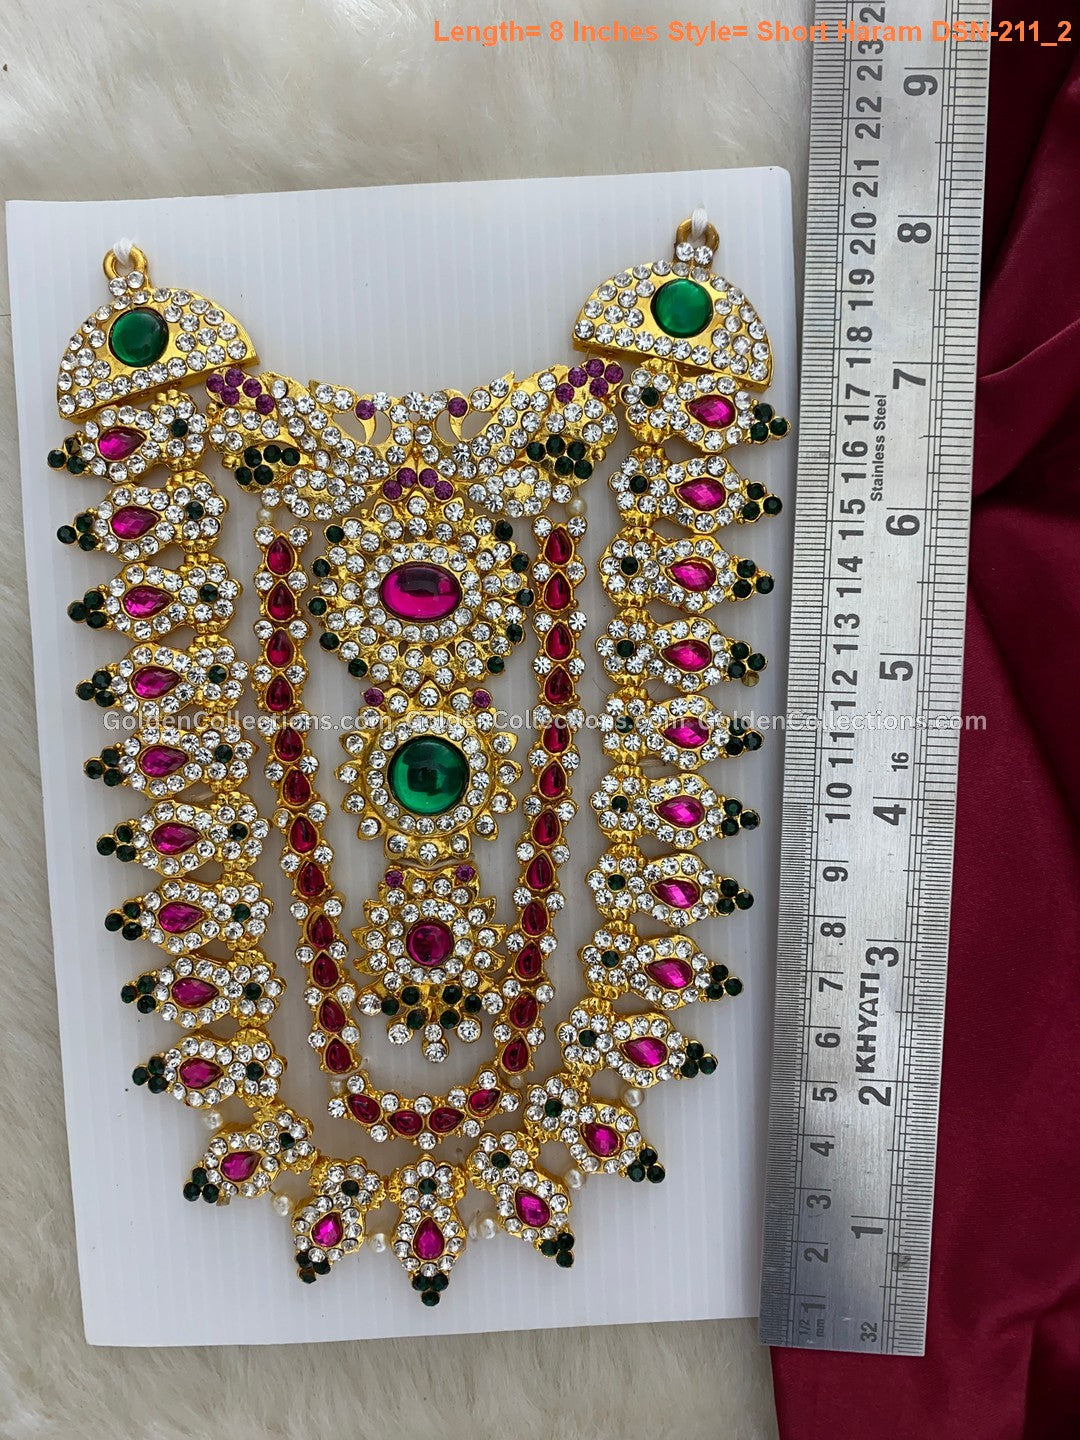 Varalakshmi Devi Jewelry - Buy Deity Ornaments Online - DSN-211 2